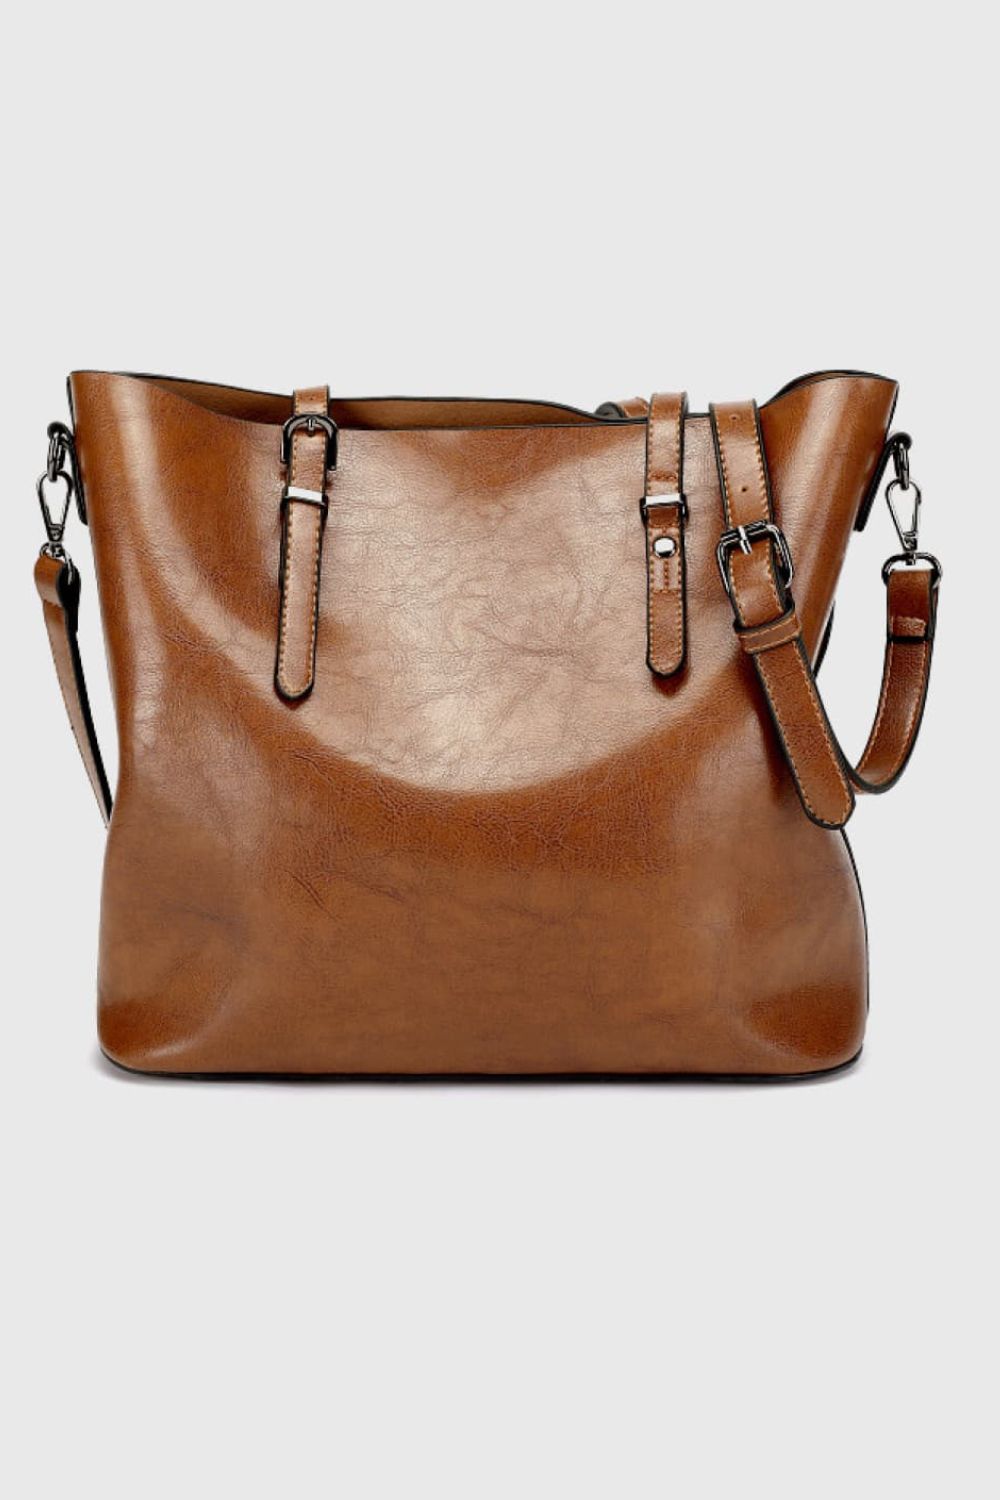 - Brown PU Leather Tote Bag - handbag at TFC&H Co.